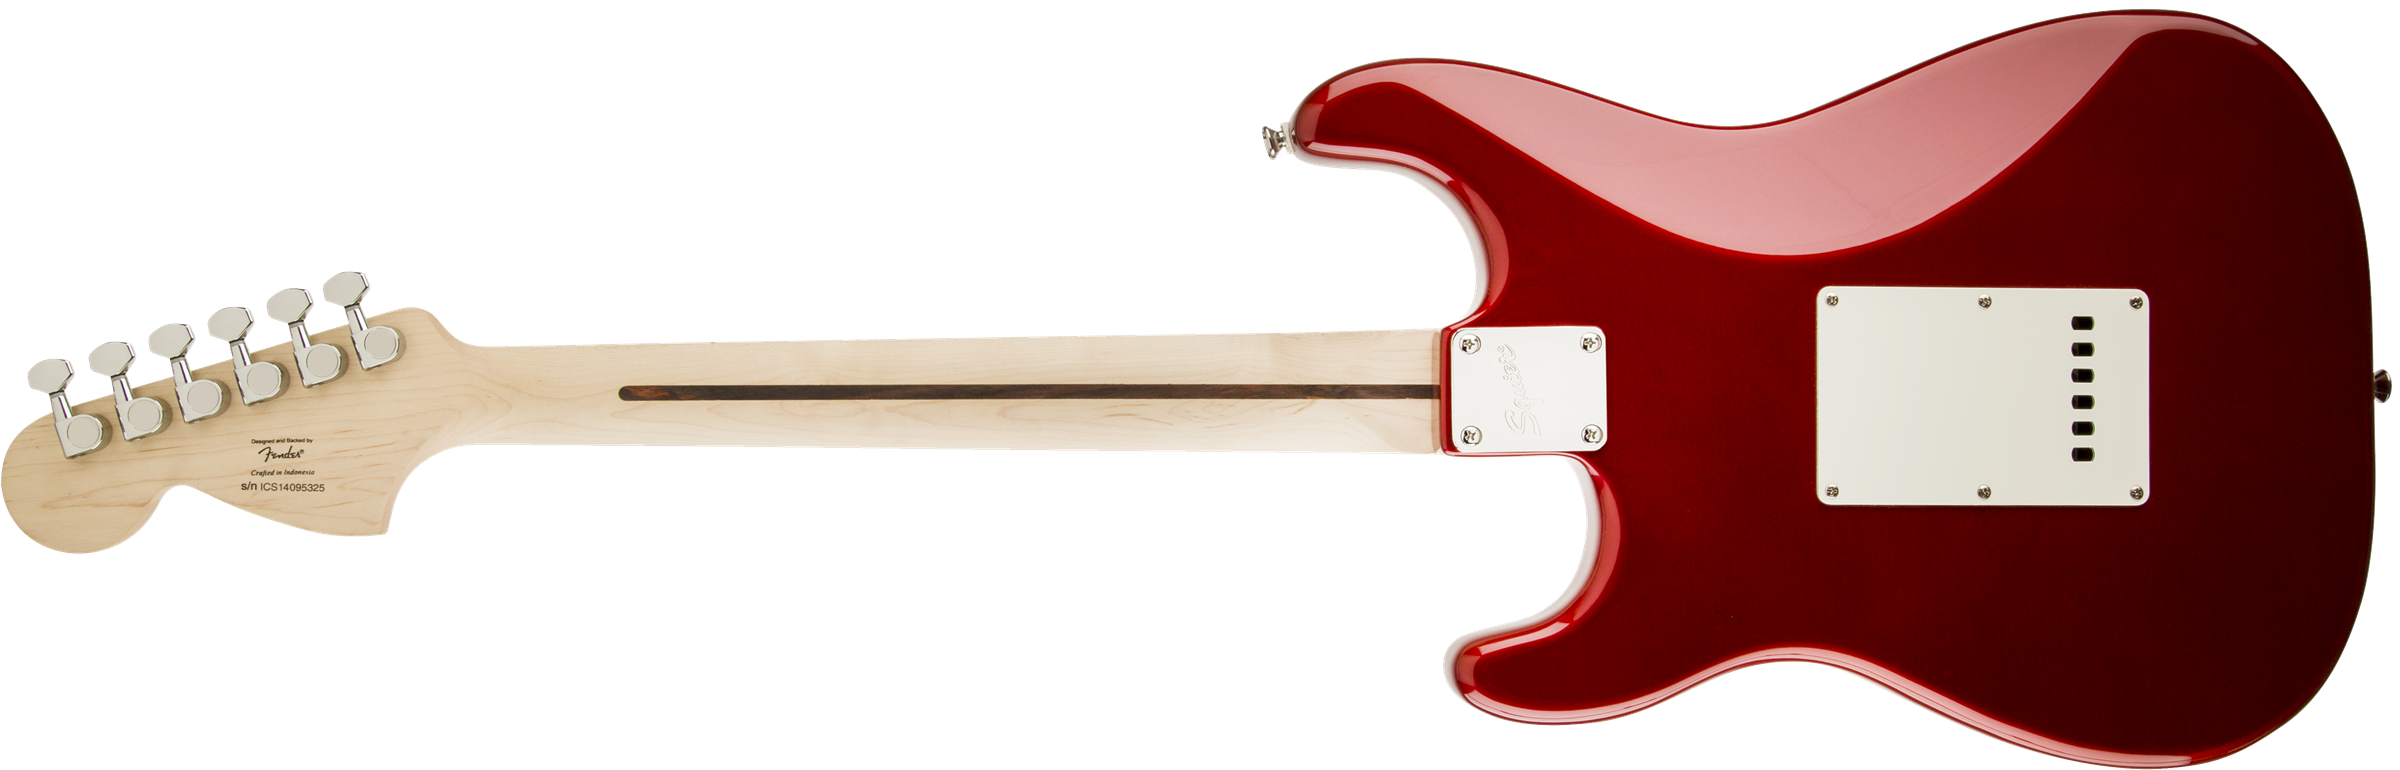 Squier Strat Standard Mn - Candy Apple Red - Guitarra eléctrica con forma de str. - Variation 1